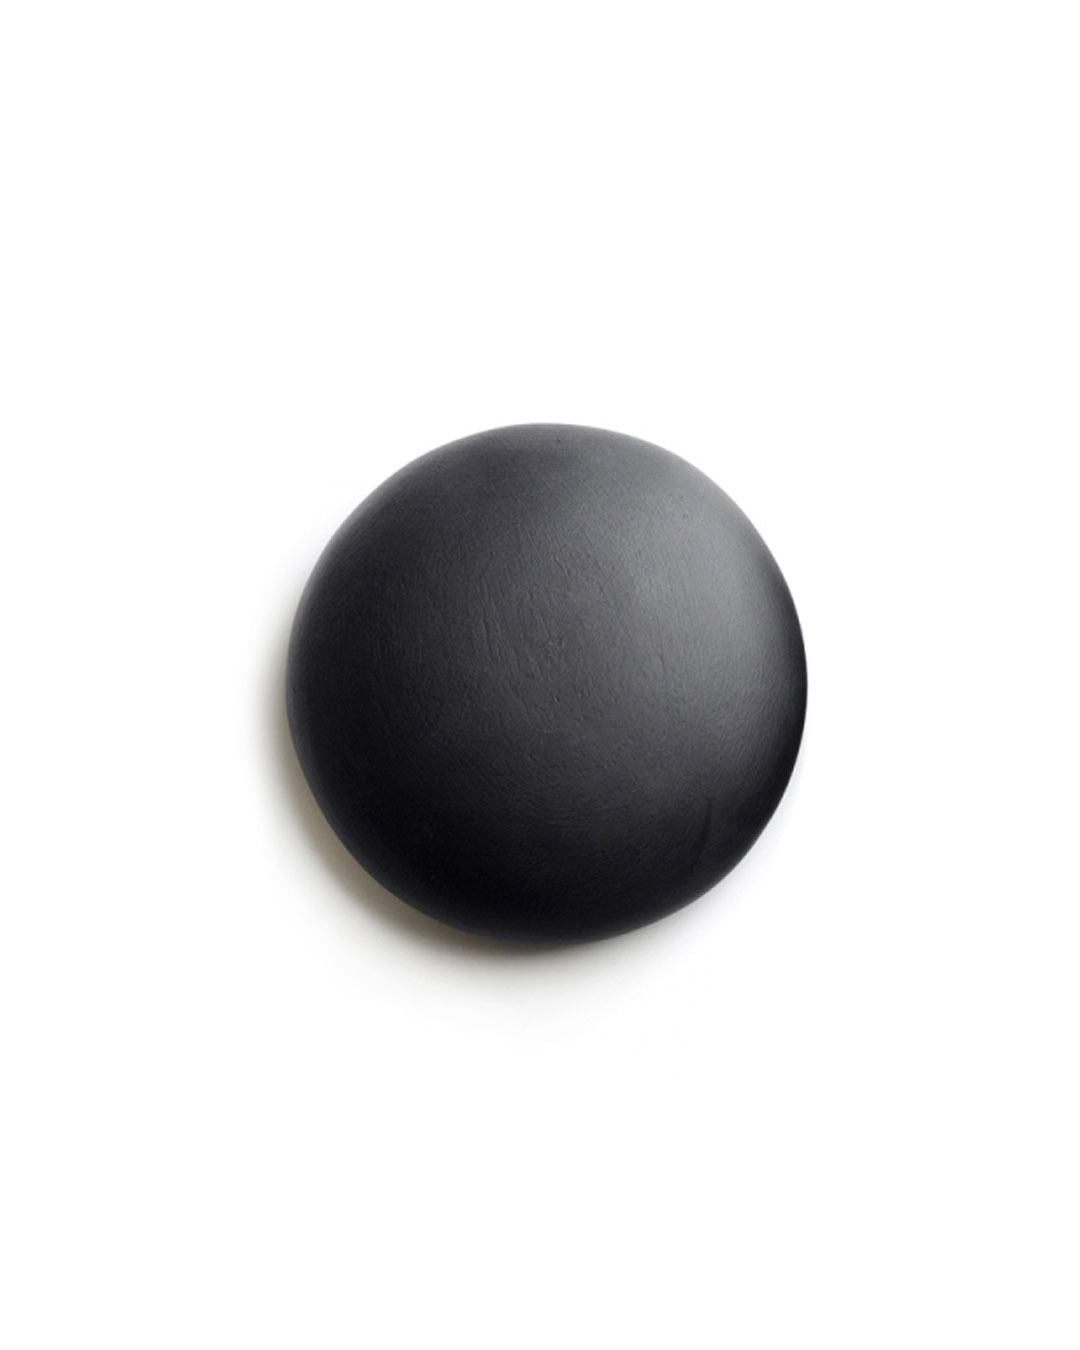 David Huycke, Black Round Mercury, 2012, voorwerp; wengé, verf, 155 x 155 x 50 mm, €630